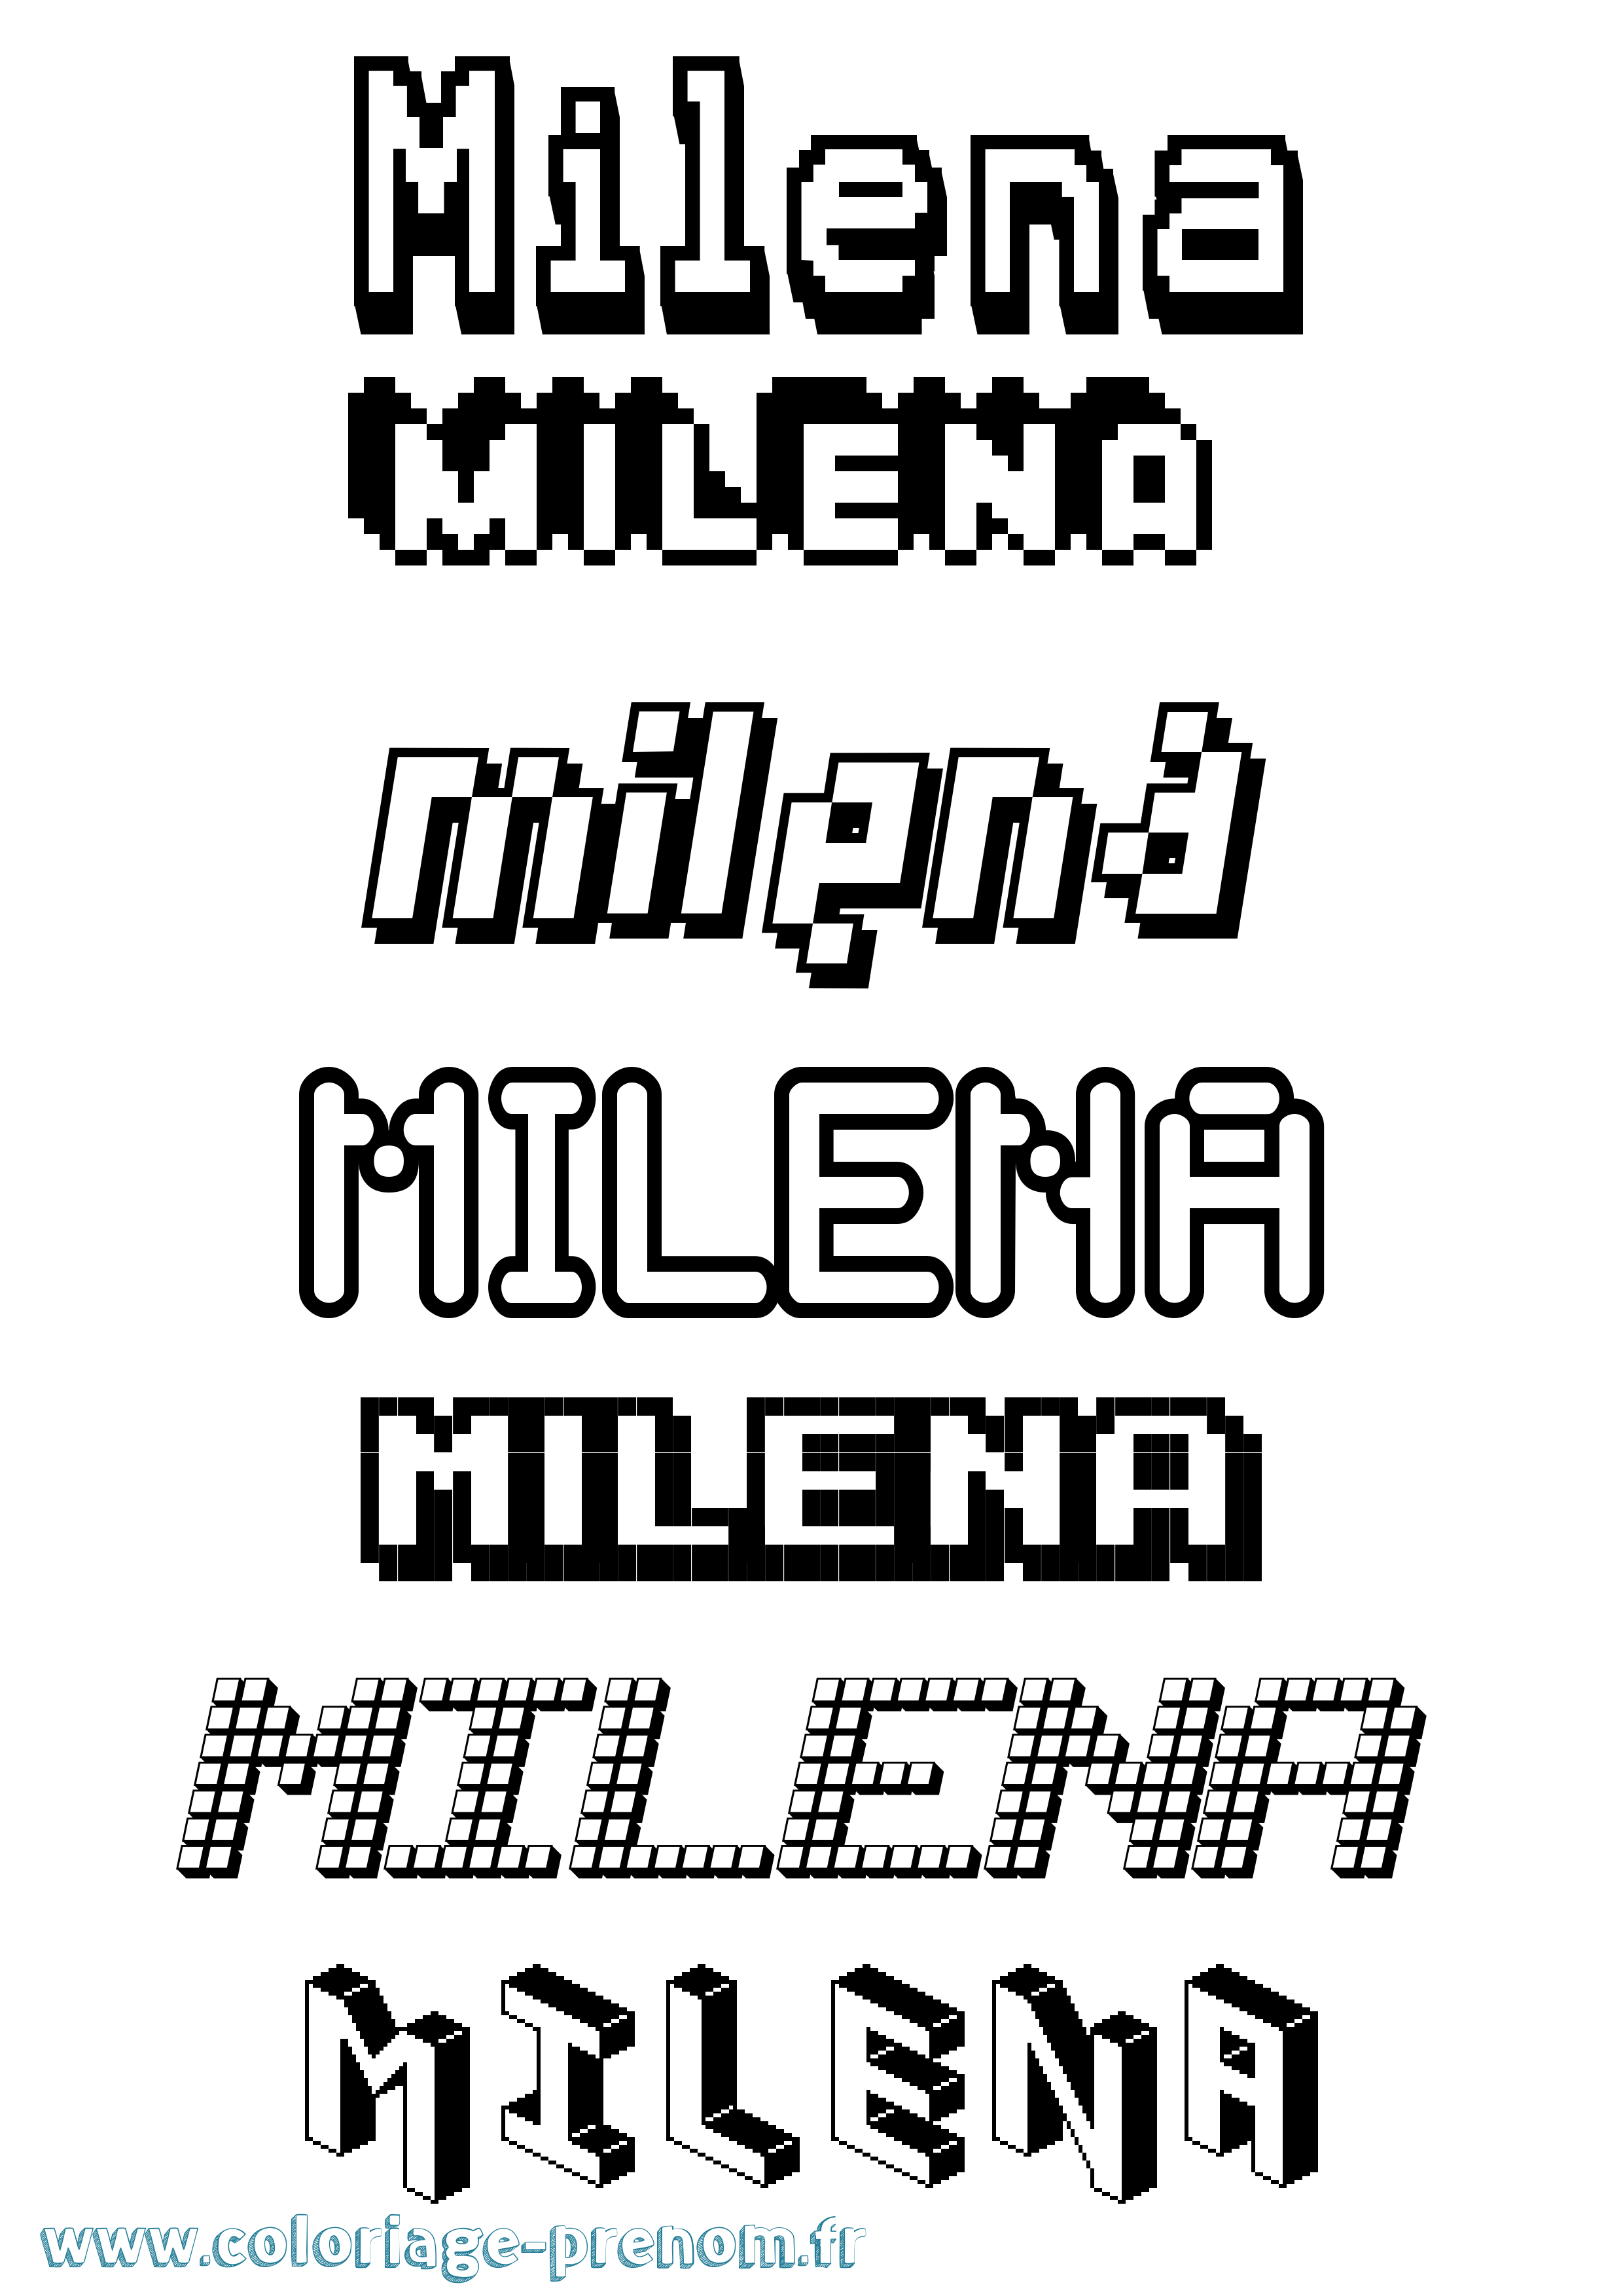 Coloriage prénom Milena